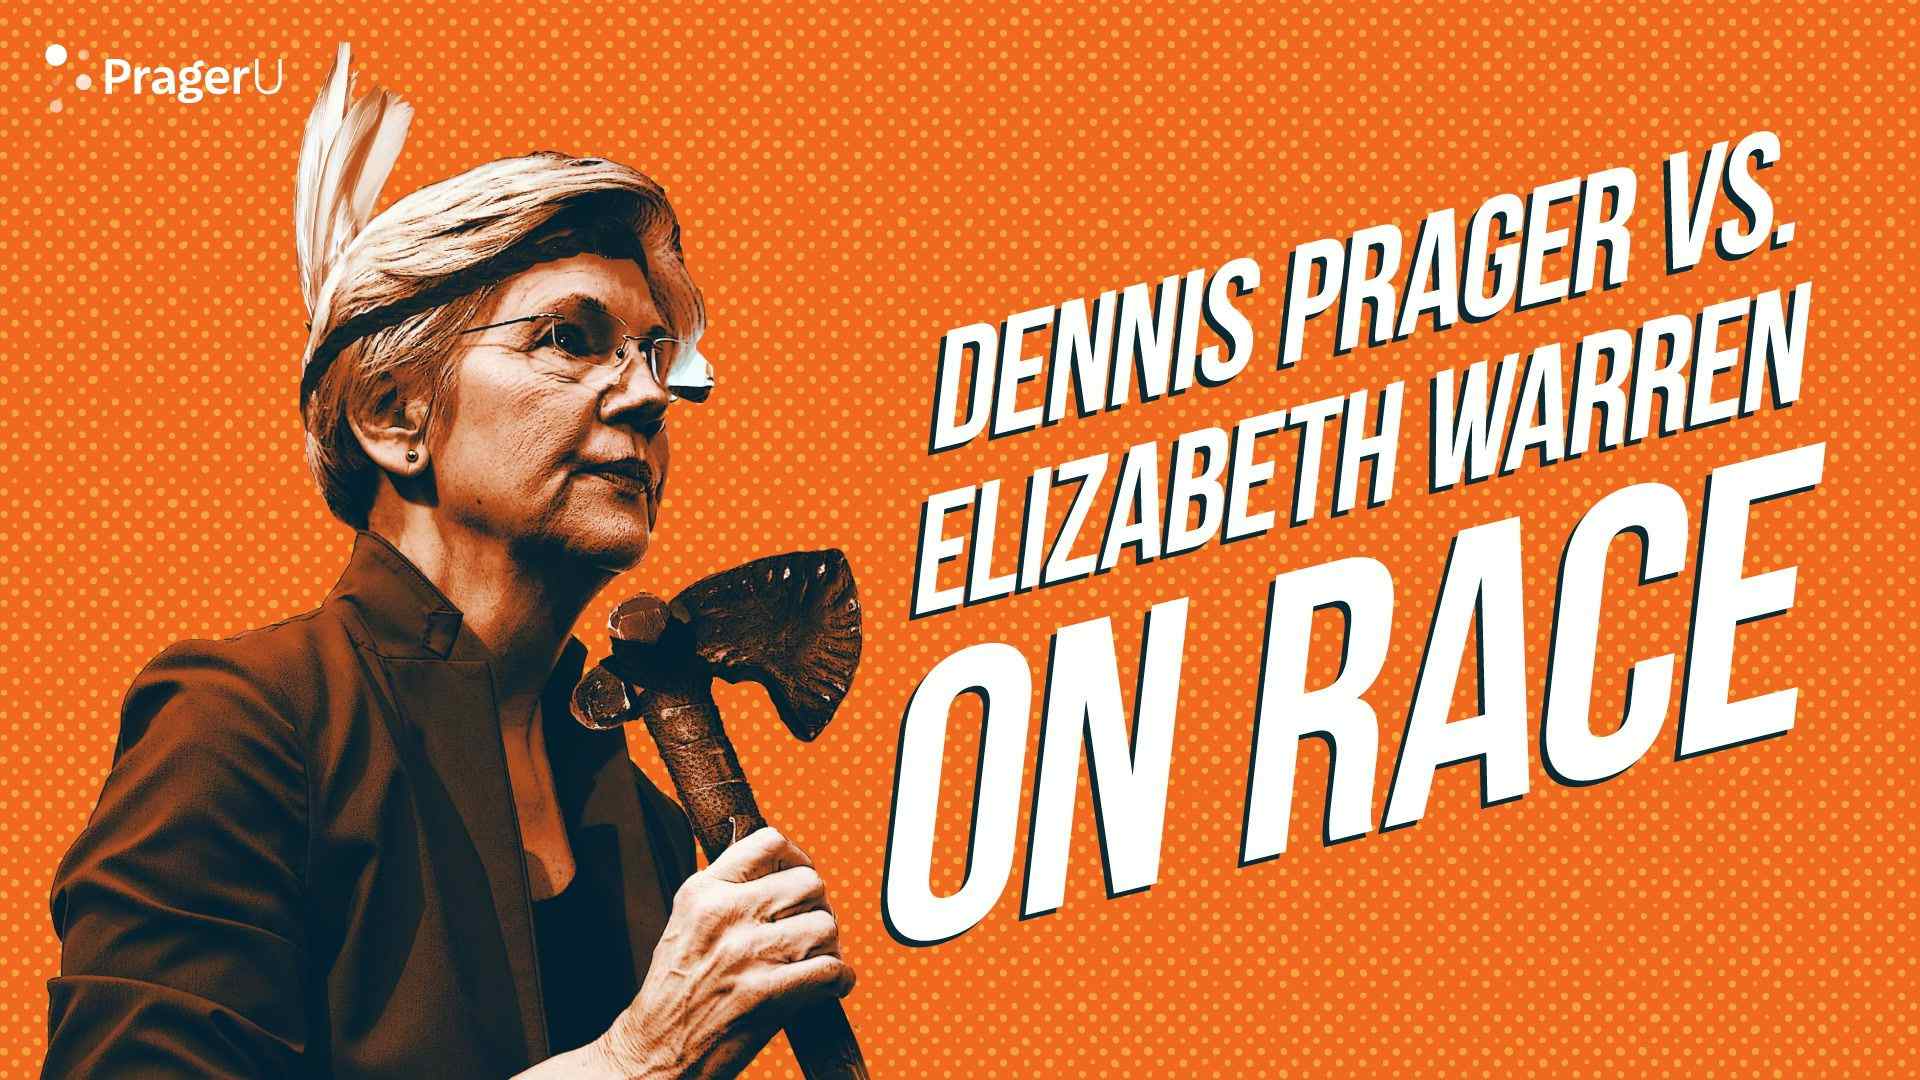 Dennis Prager vs. Elizabeth Warren on Race